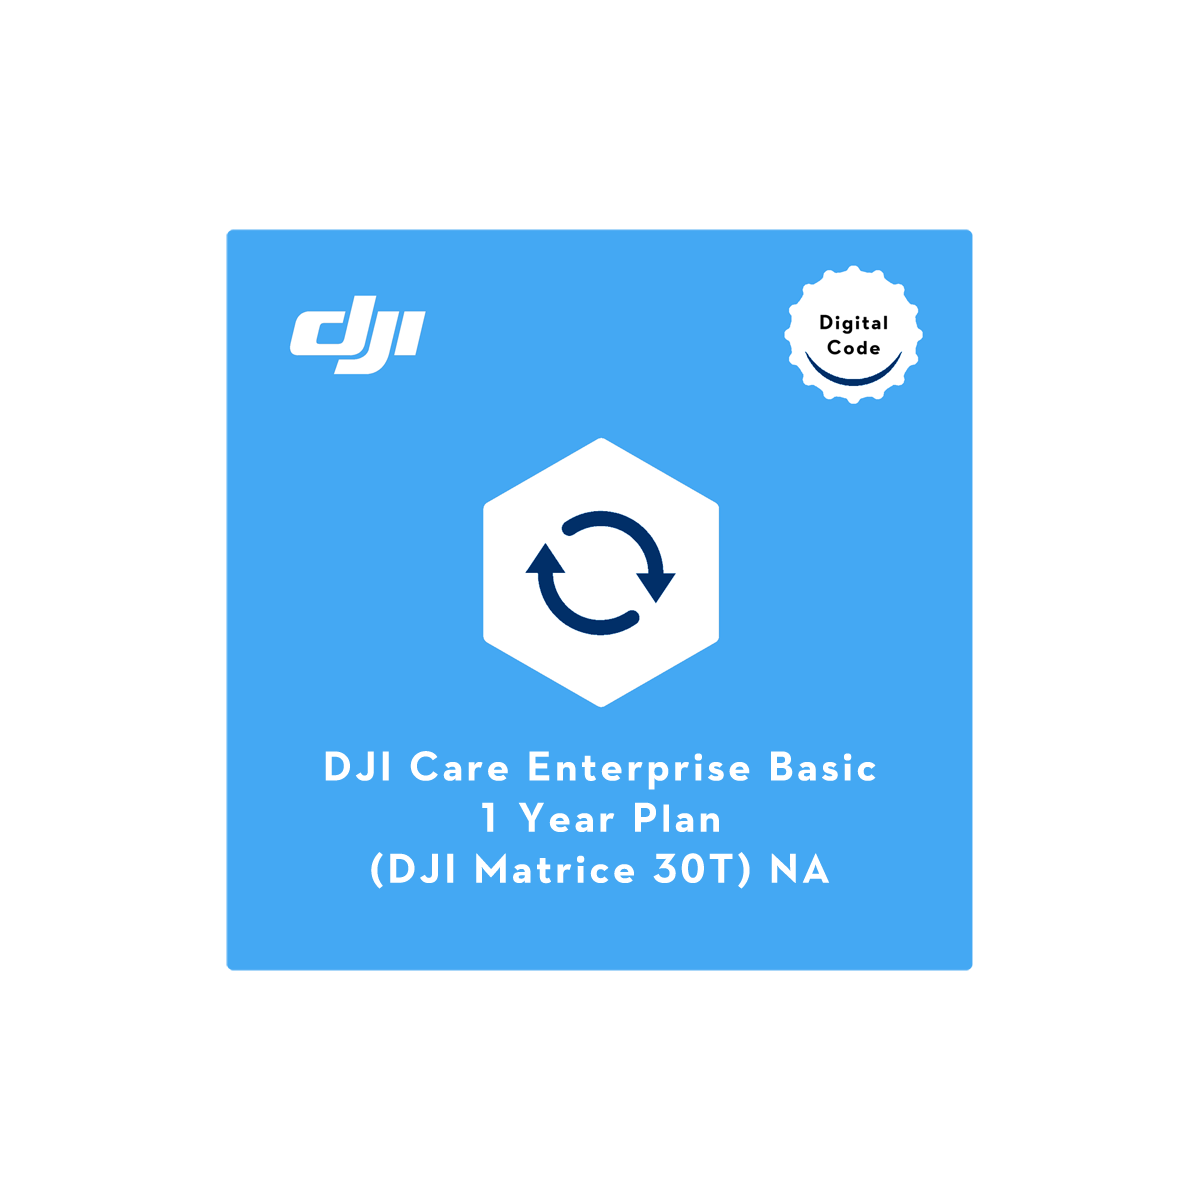 DJI Care Enterprise Basic (M30T) NA